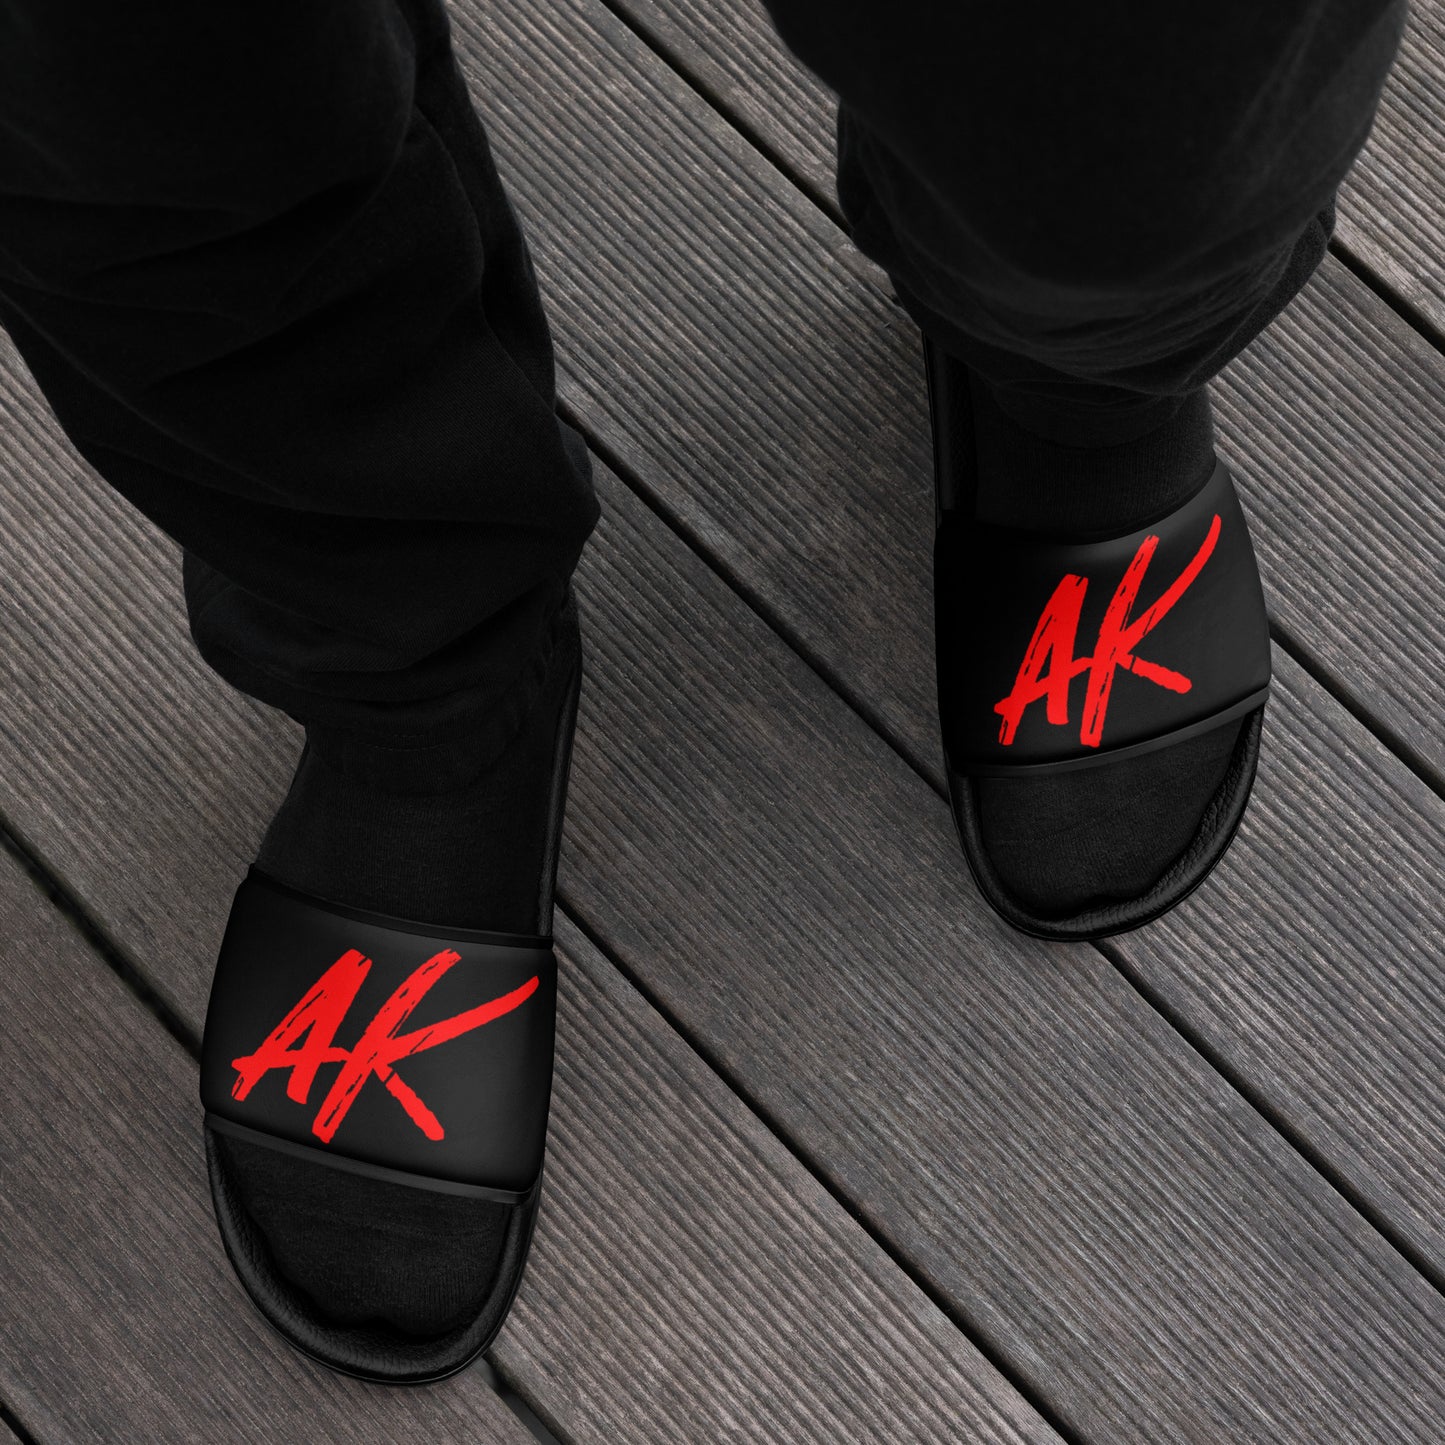 AK Slides (red/black)